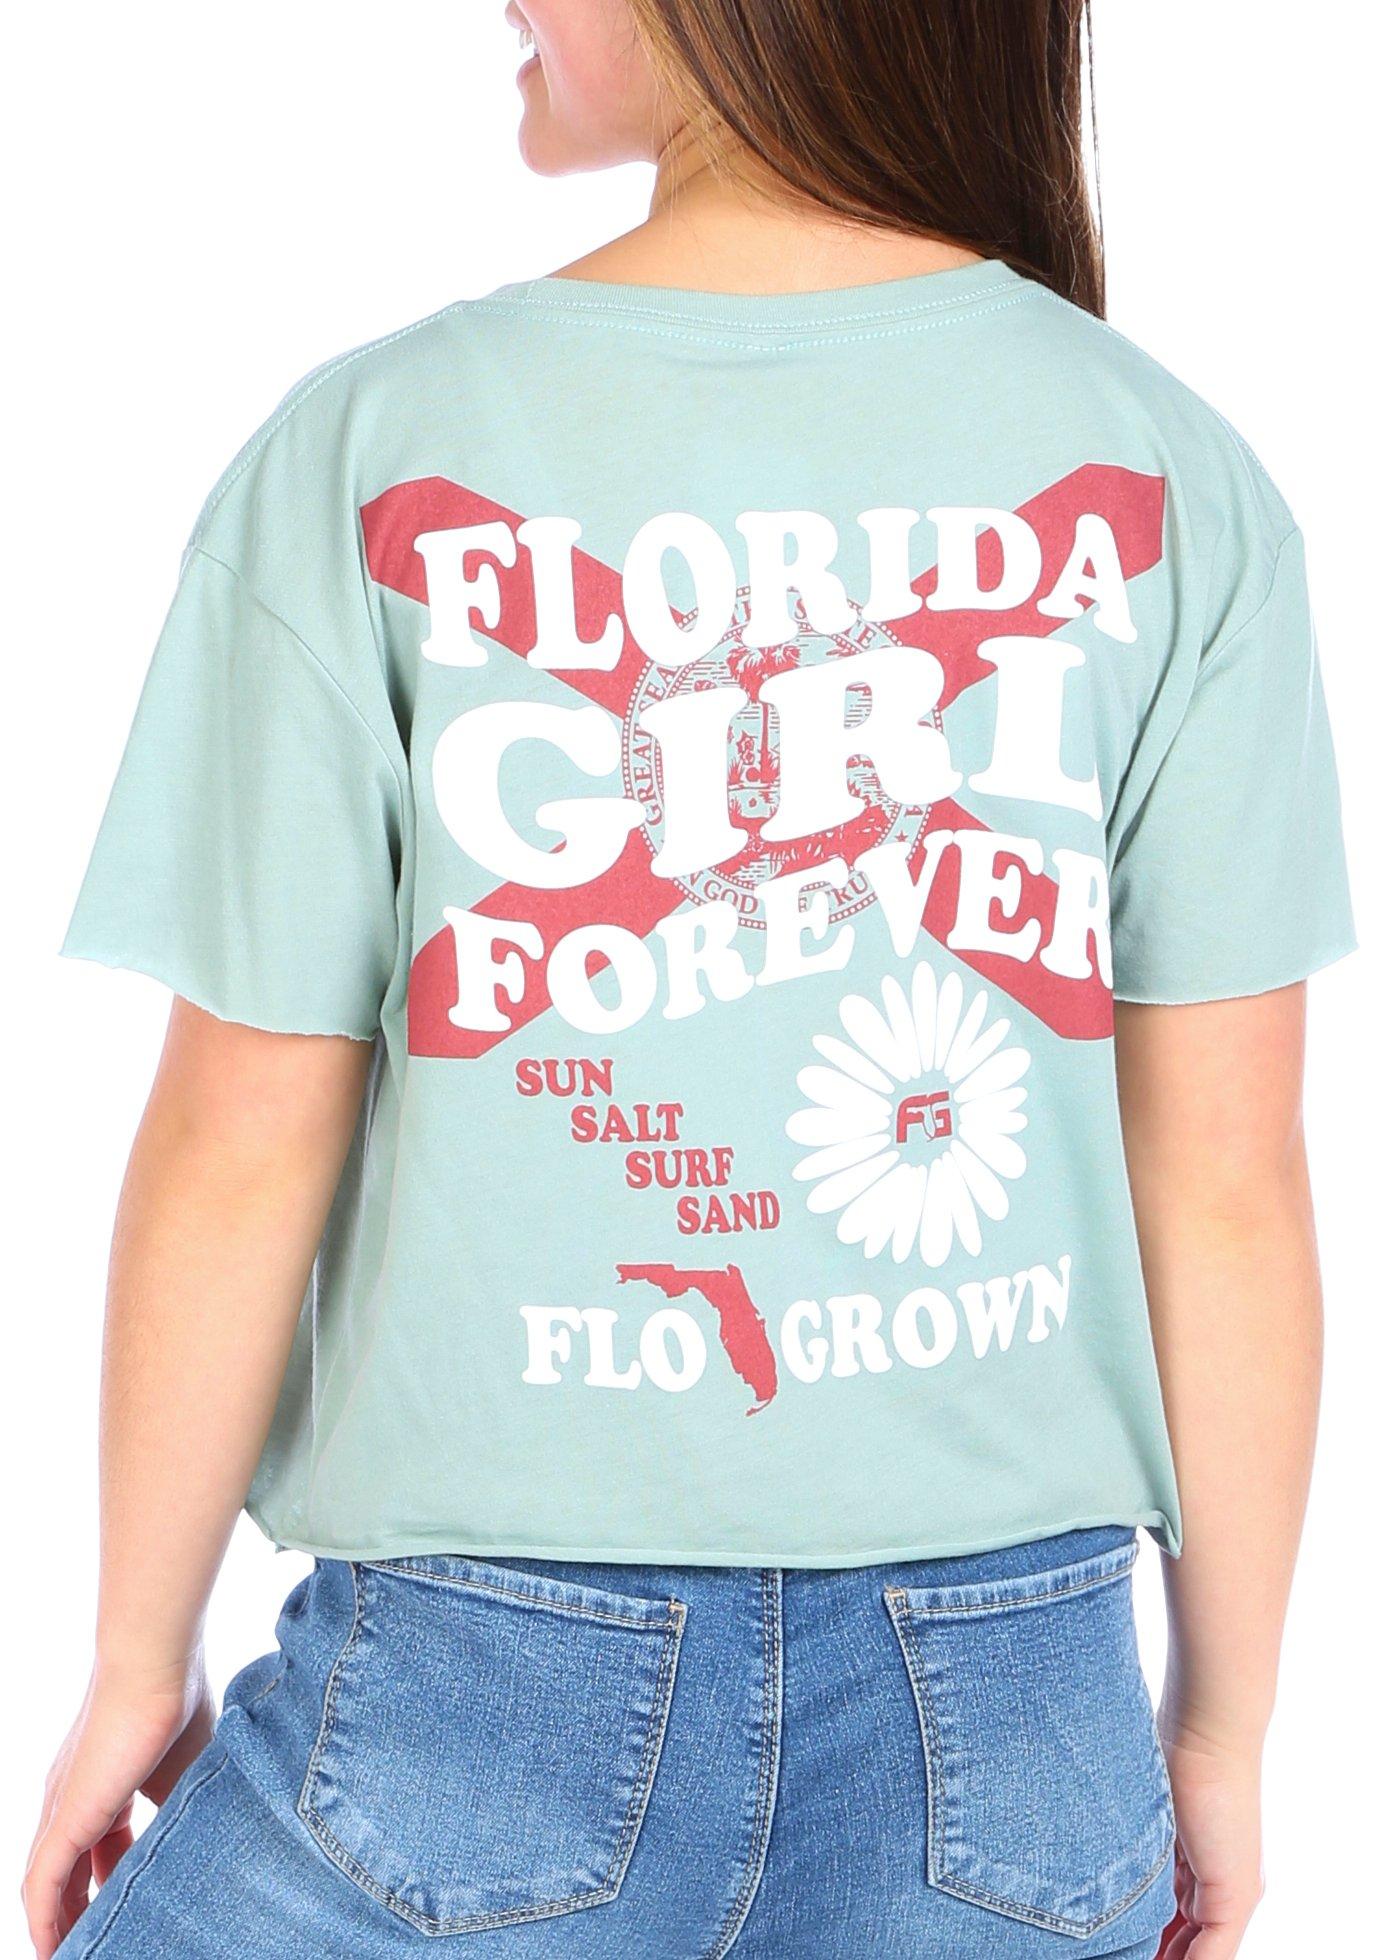 FloGrown Juniors Florida Girl Forever Short Sleeve Top